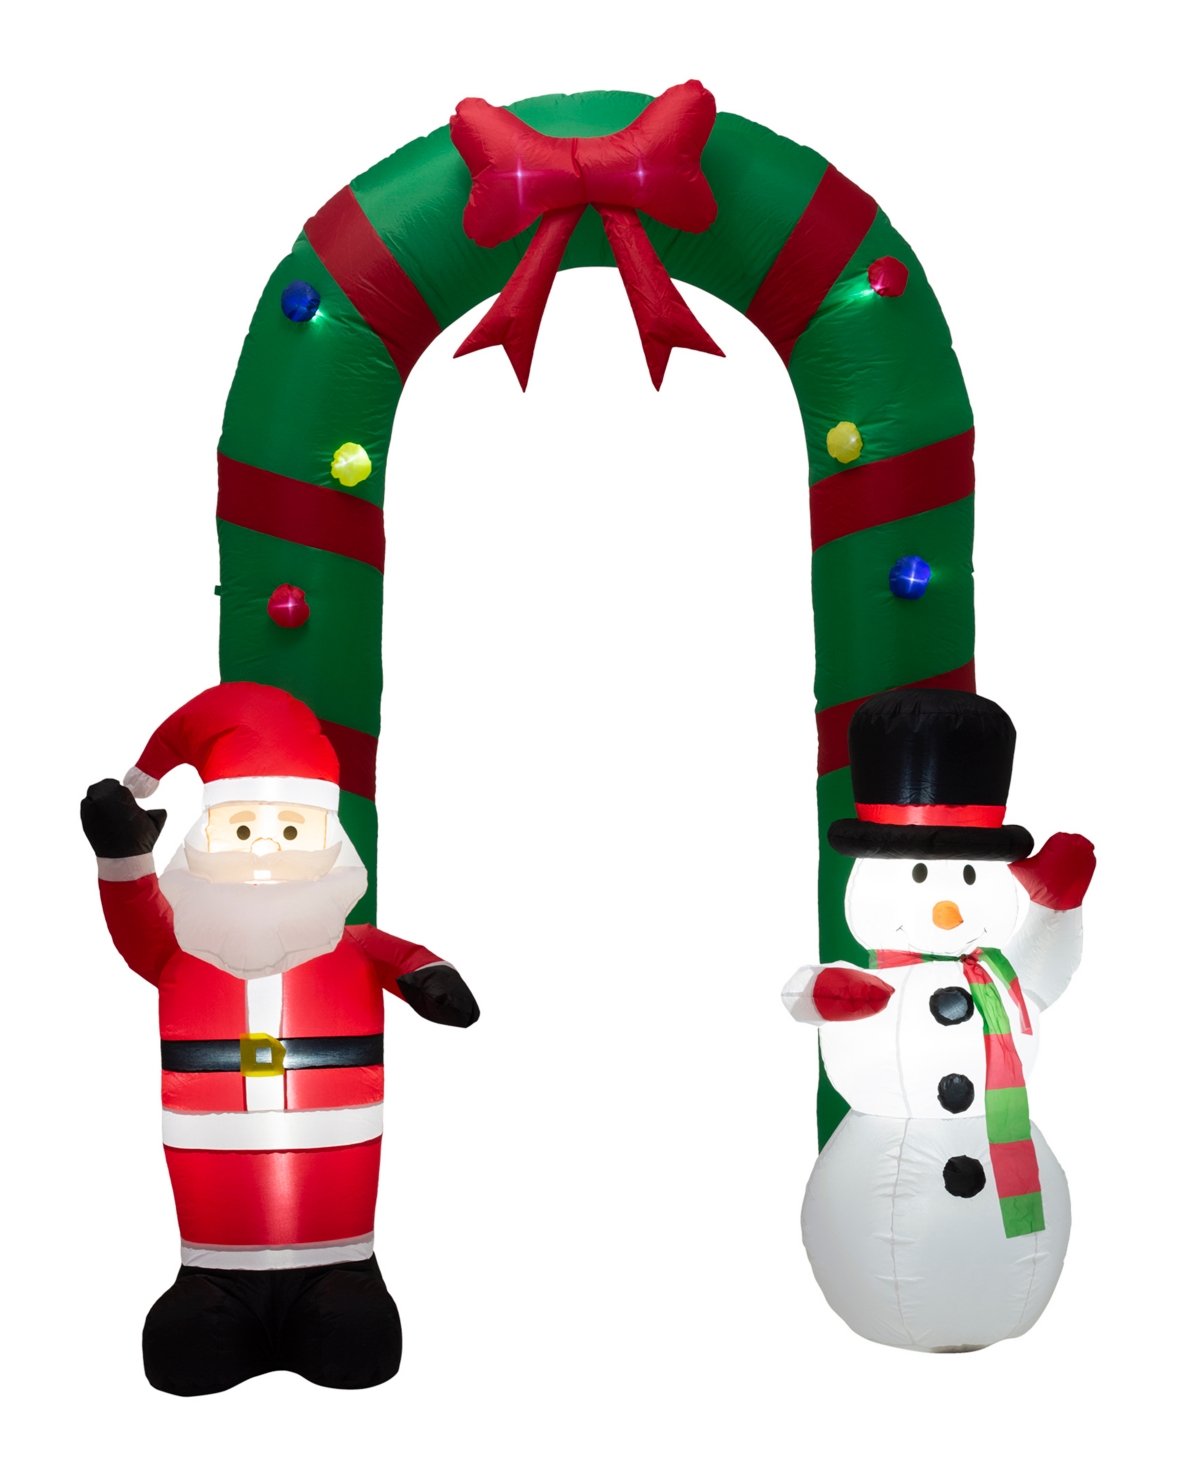 Glitz home 8' Inflatable Santa Snowman Gate Arch - Multi